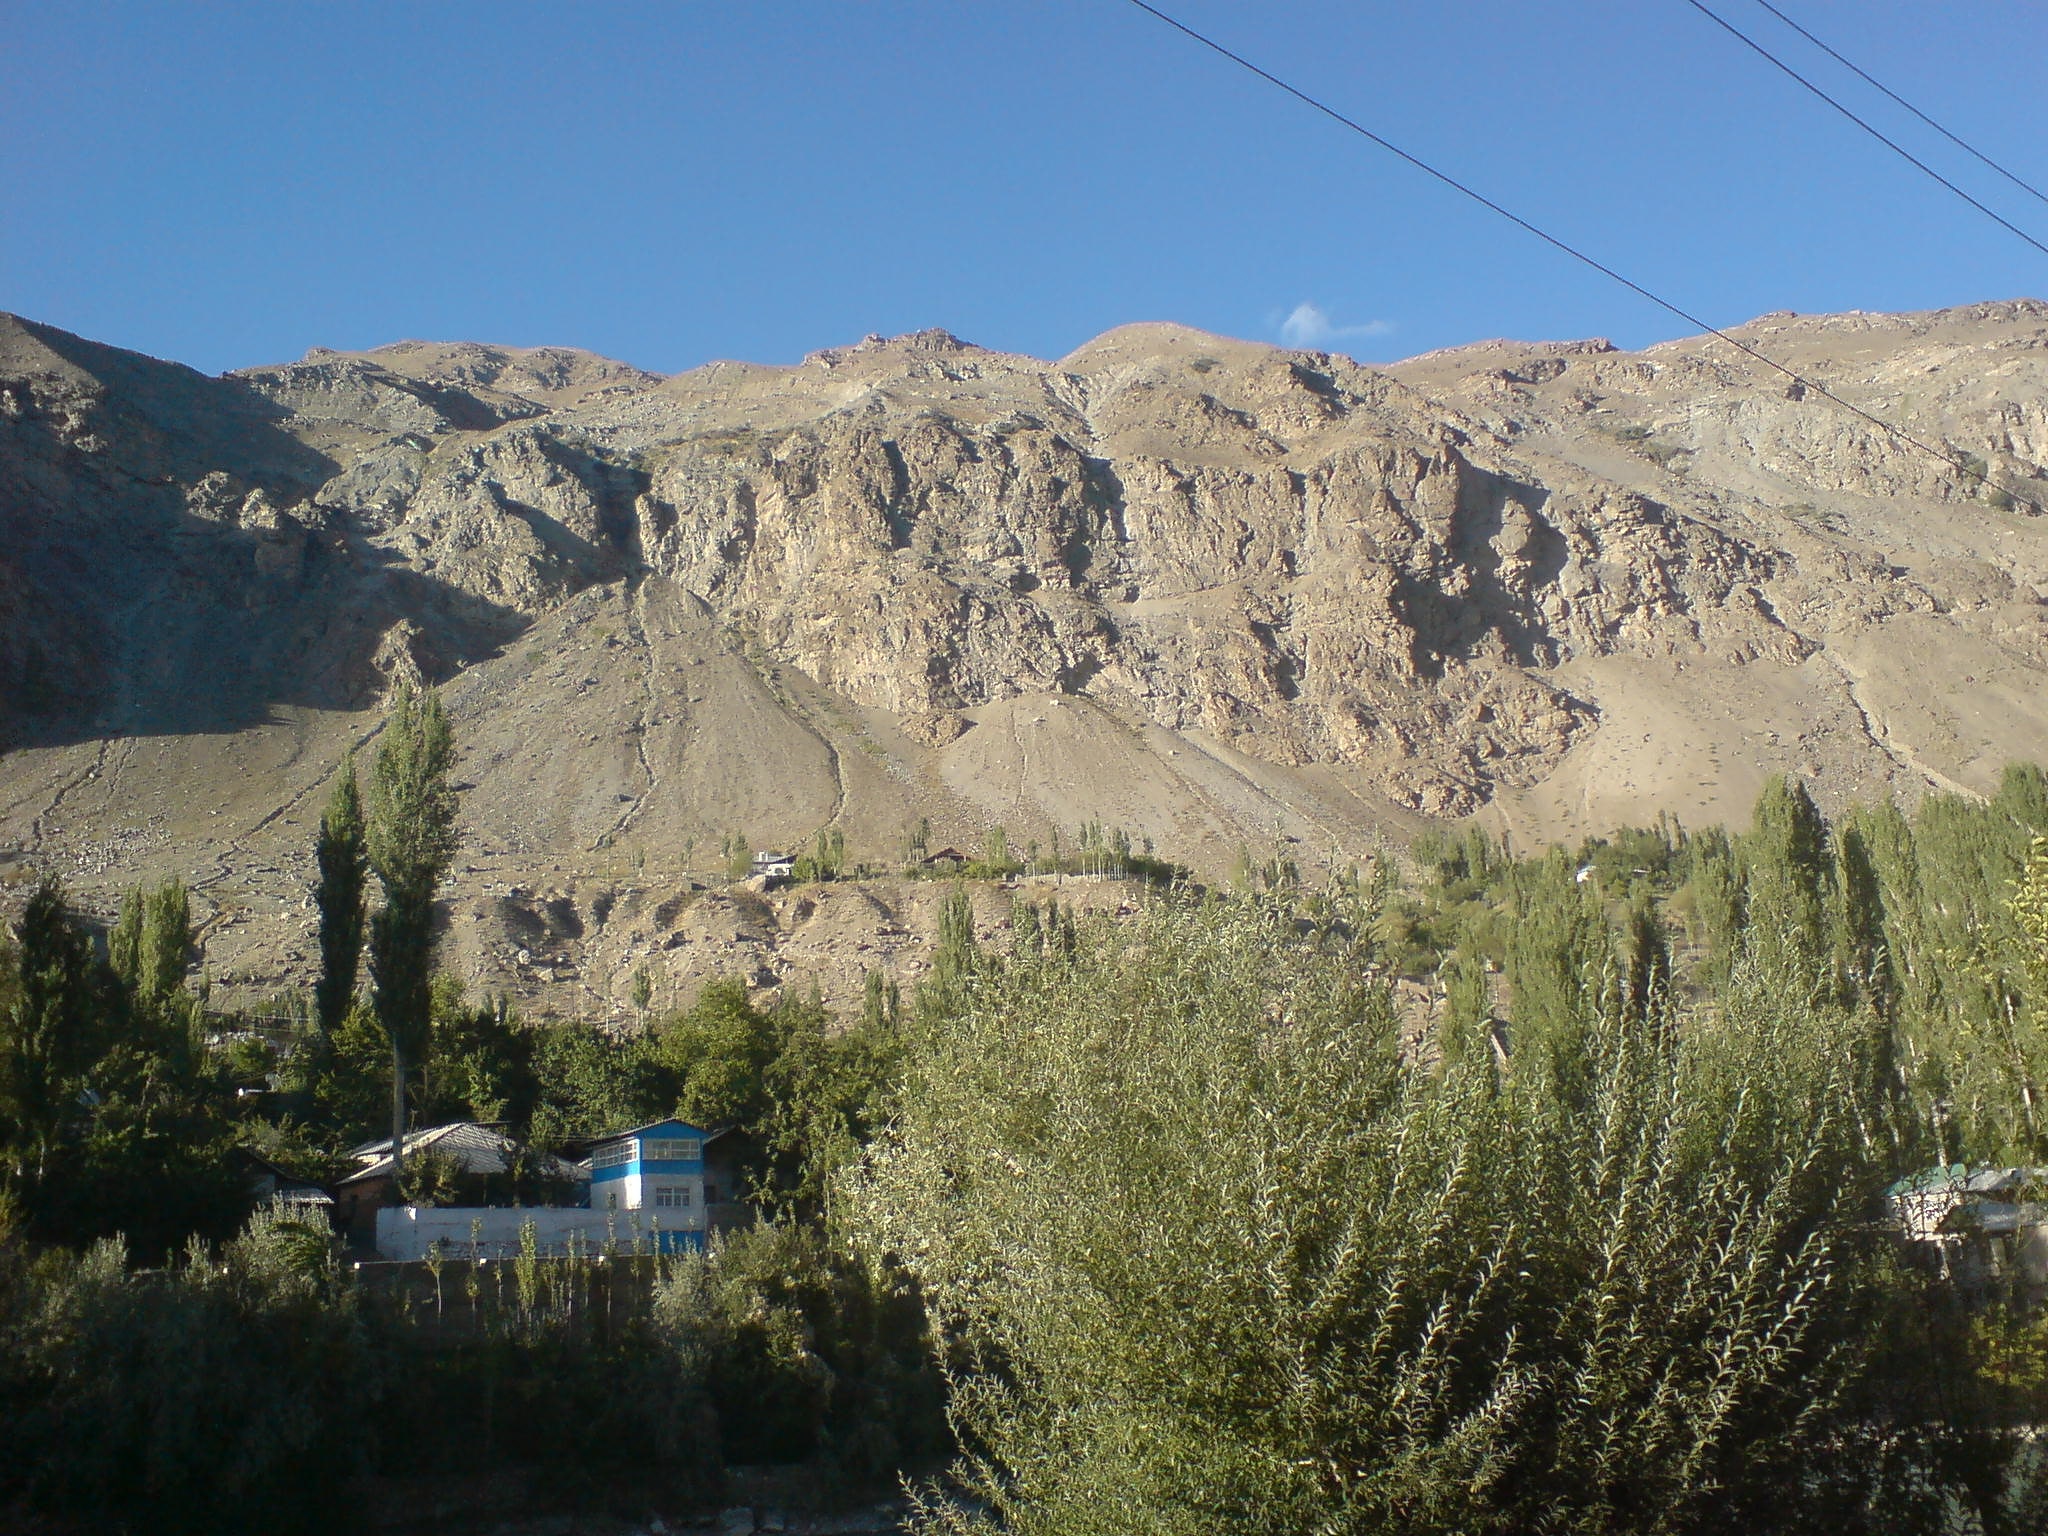 Khorog, Tadjikistan